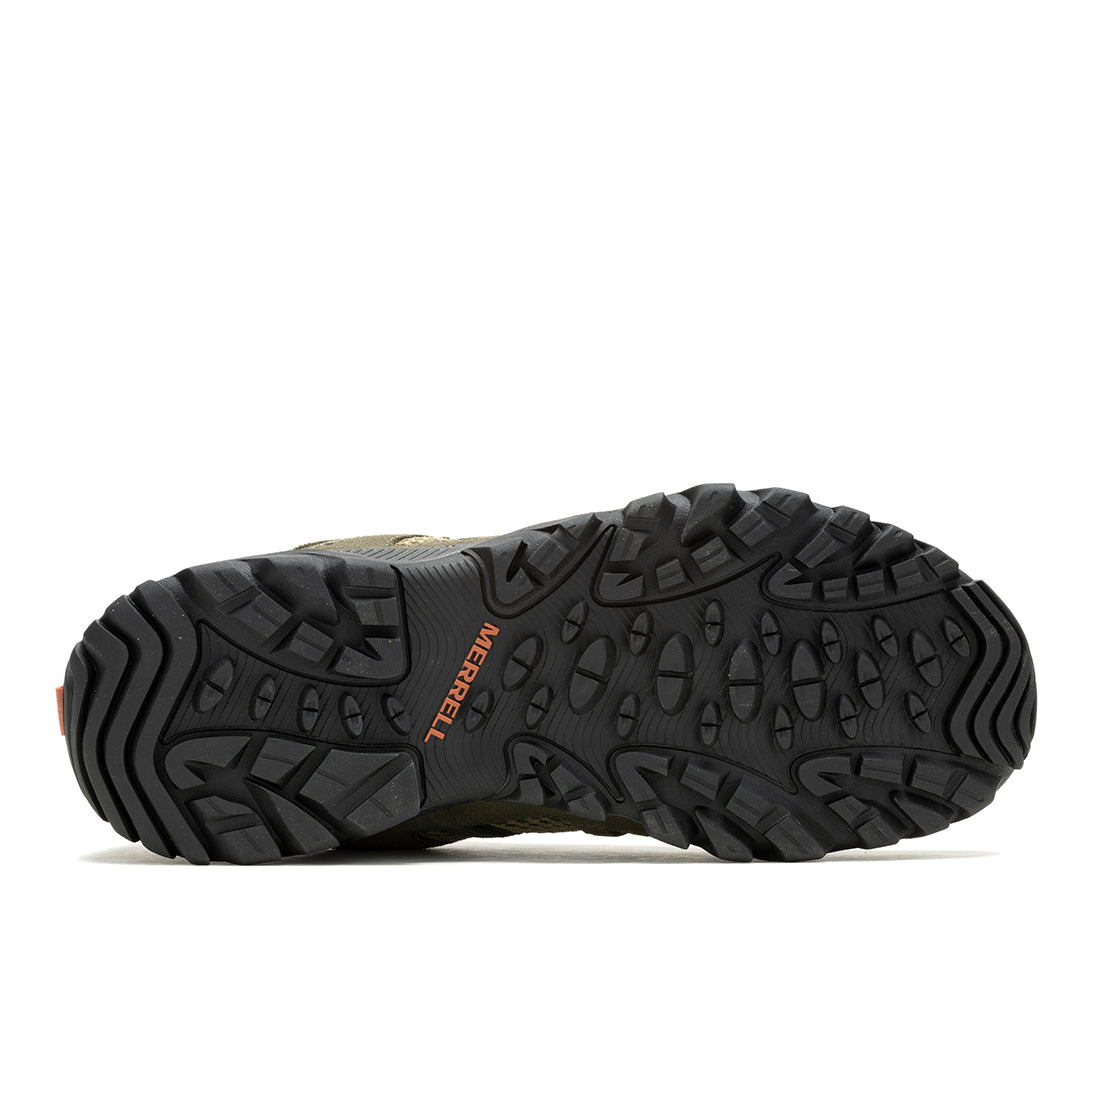 Oakcreek Waterproof-Olive/Clay Mens Hiking Shoes